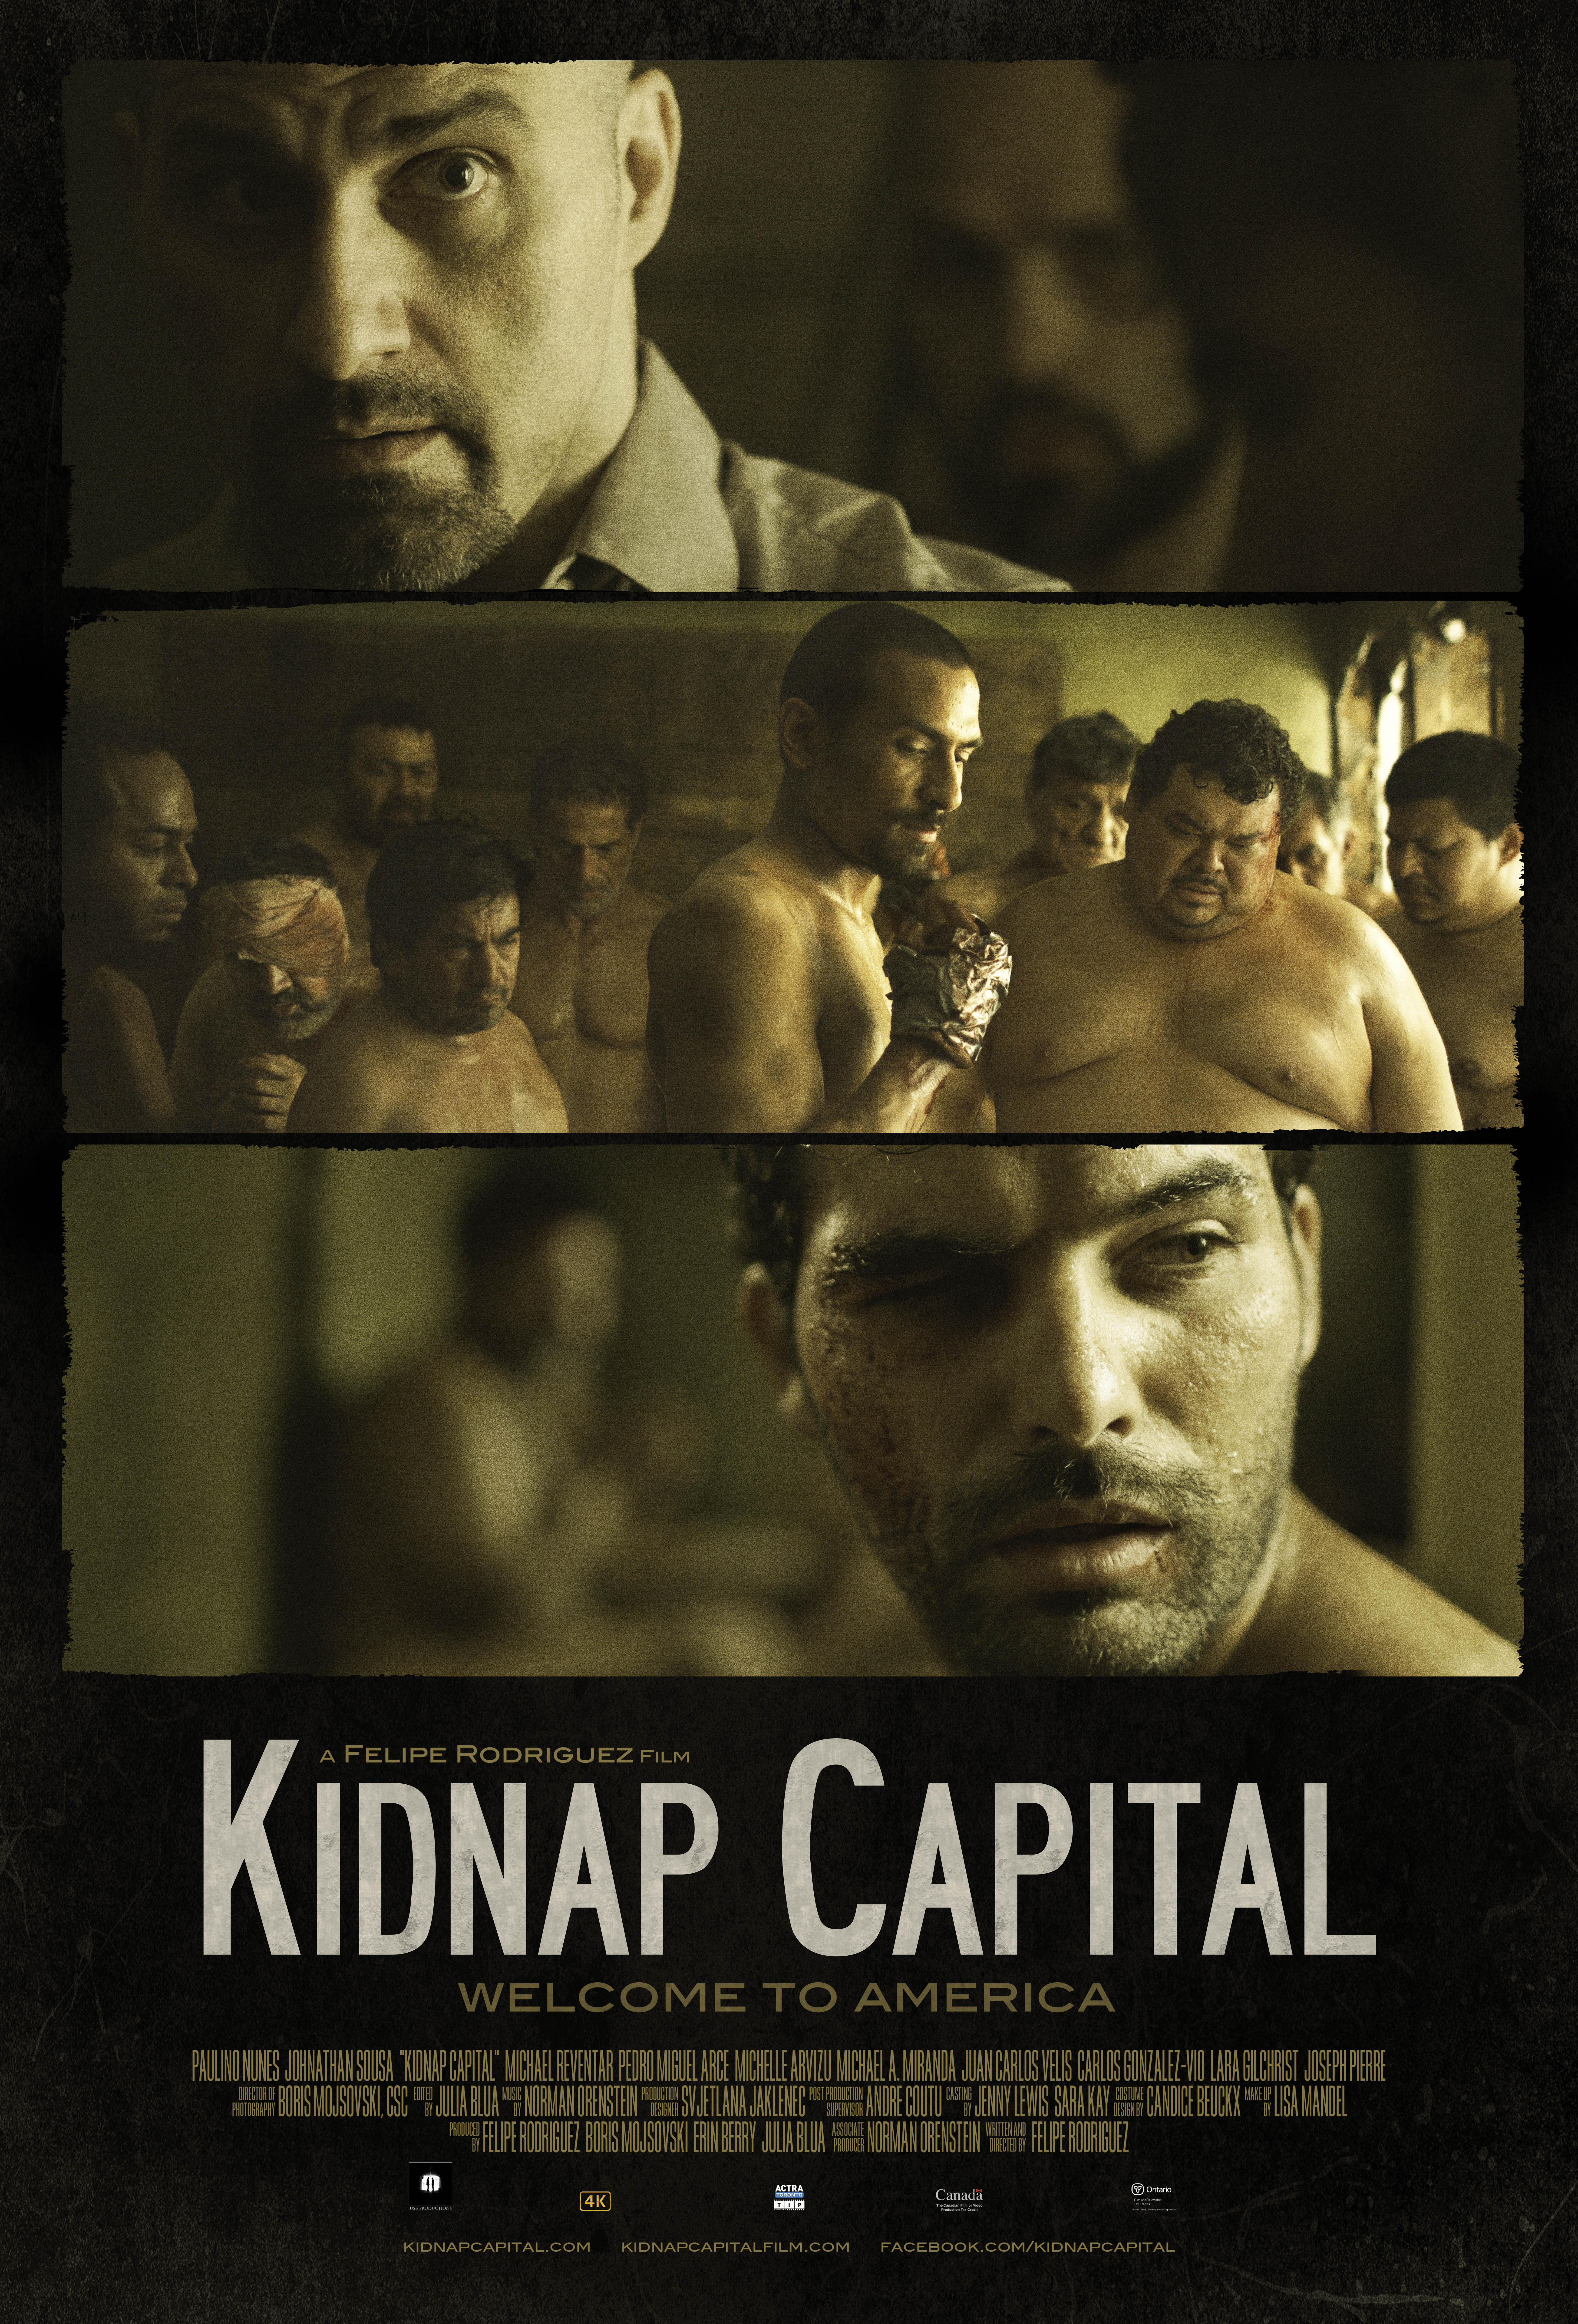 Nonton film Kidnap Capital layarkaca21 indoxx1 ganool online streaming terbaru